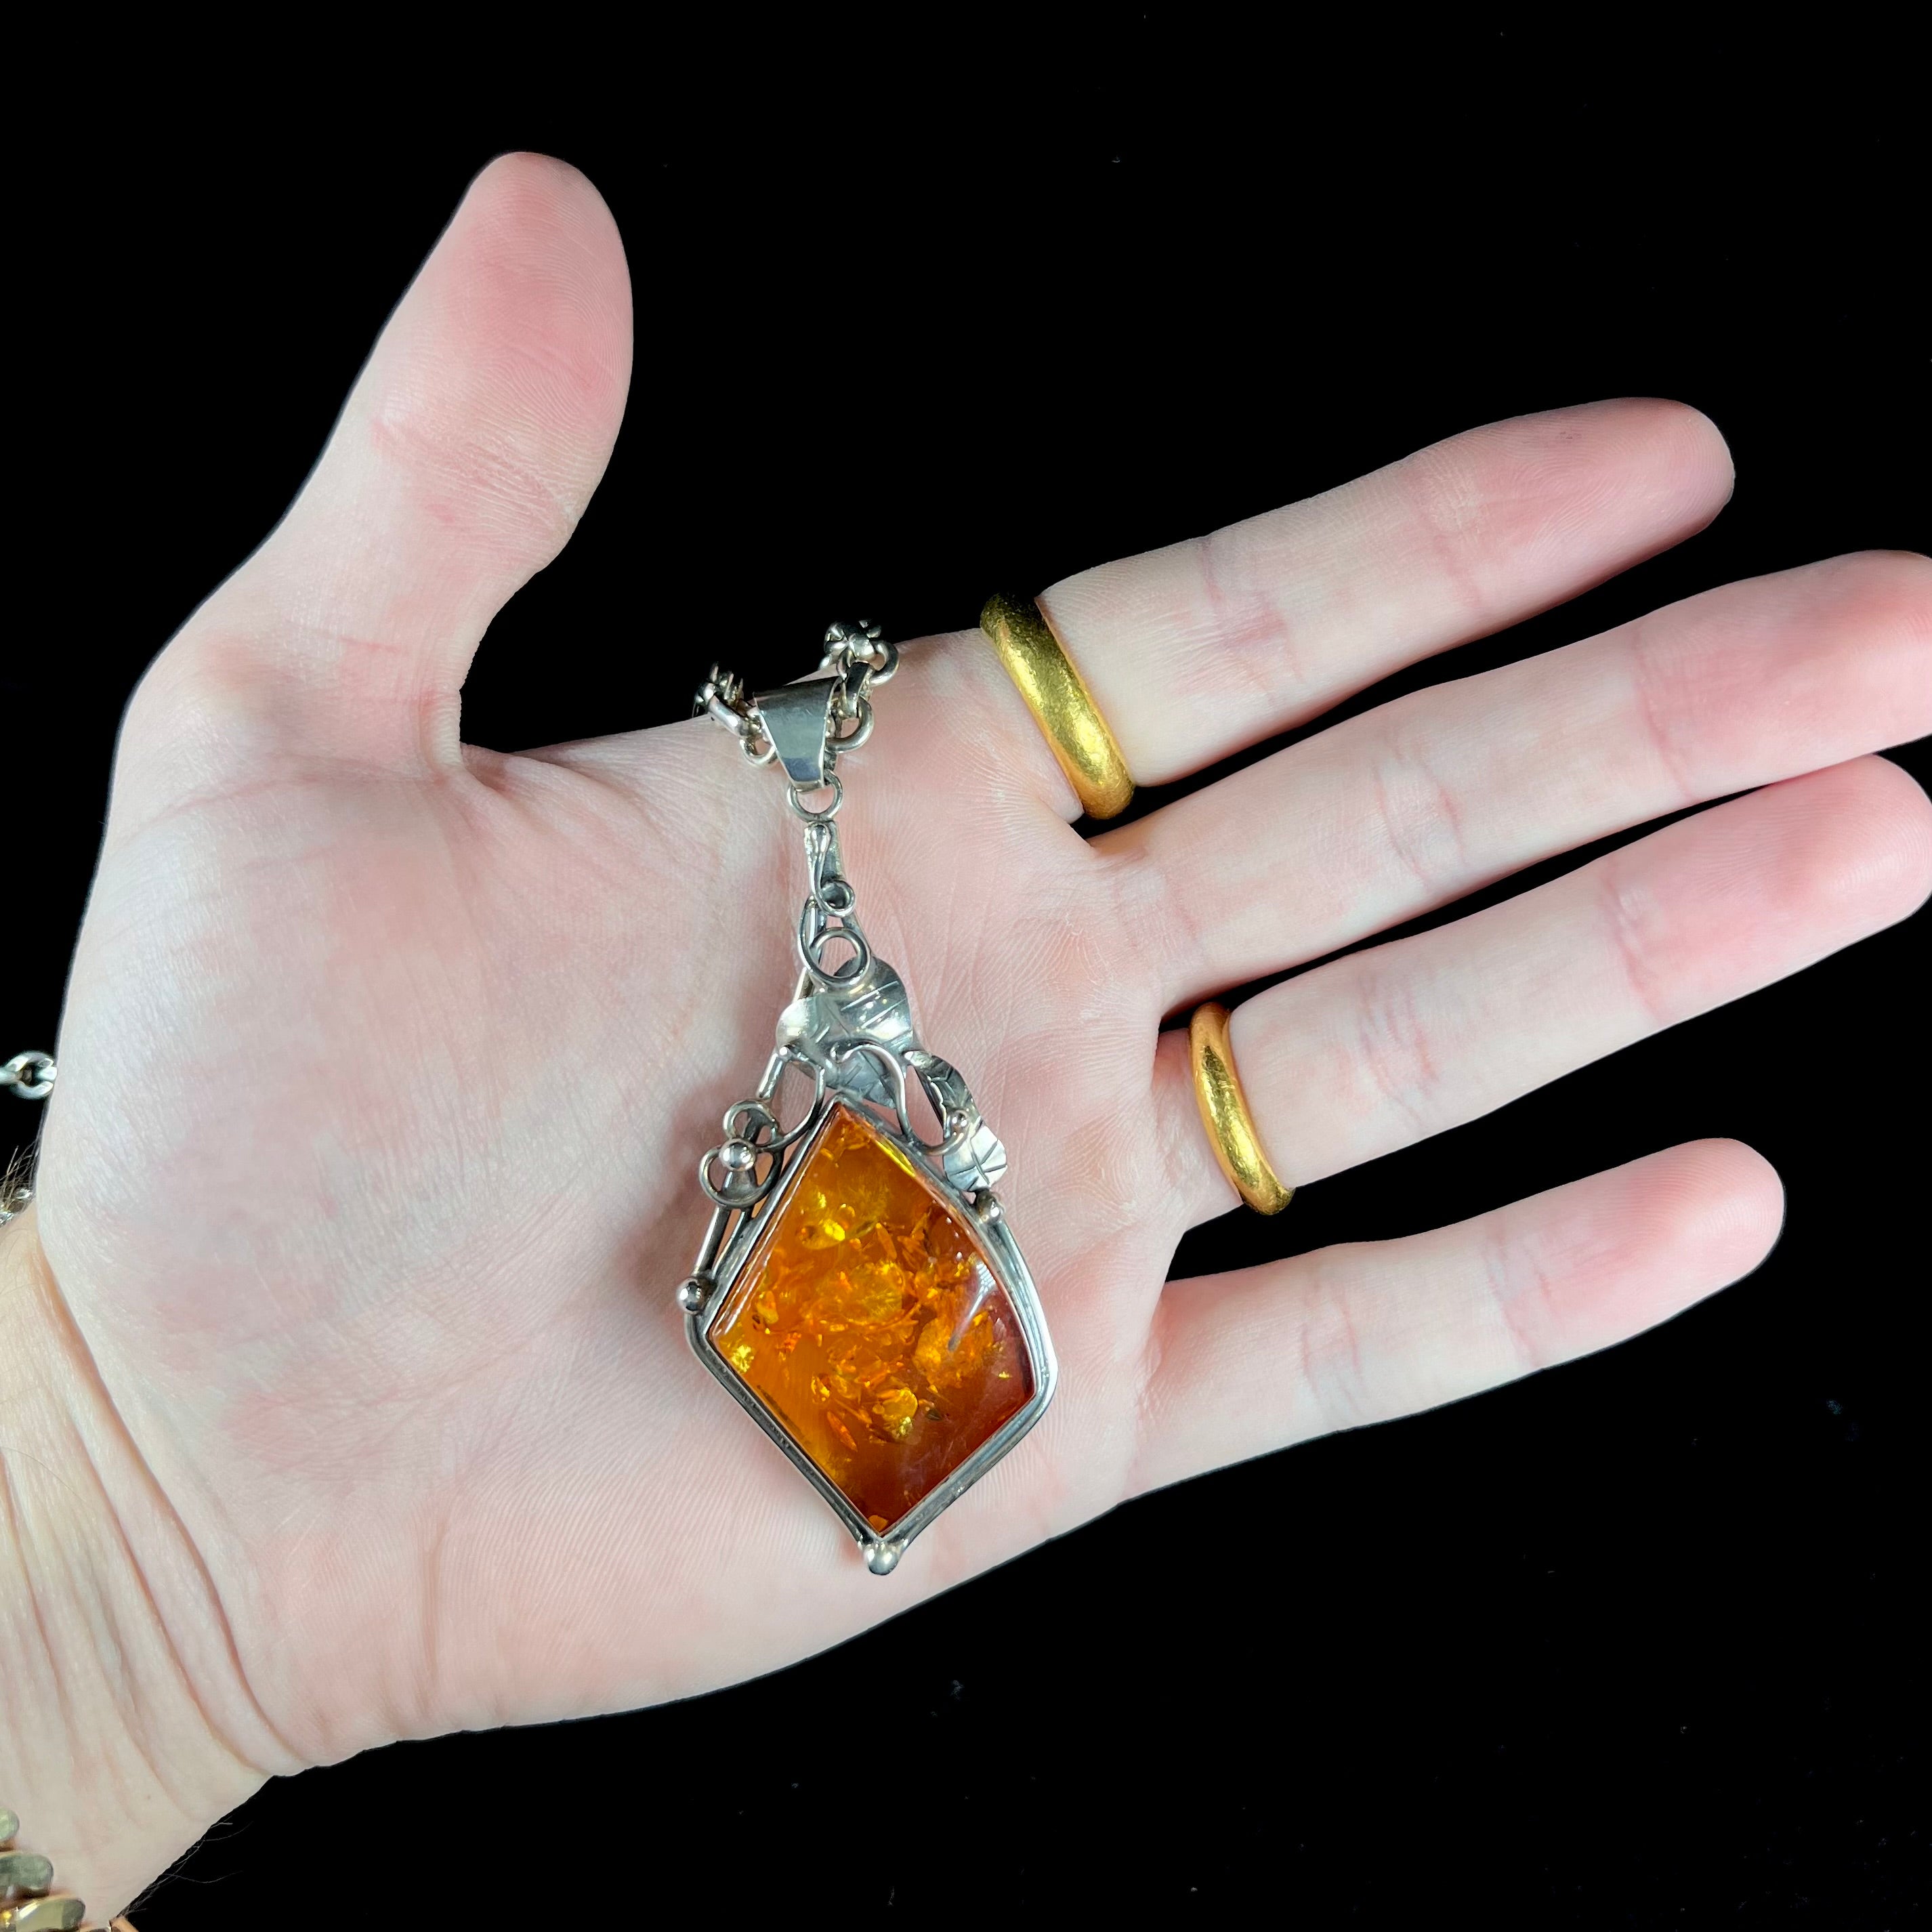 67 g. Vintage 100% natural Baltic amber necklace